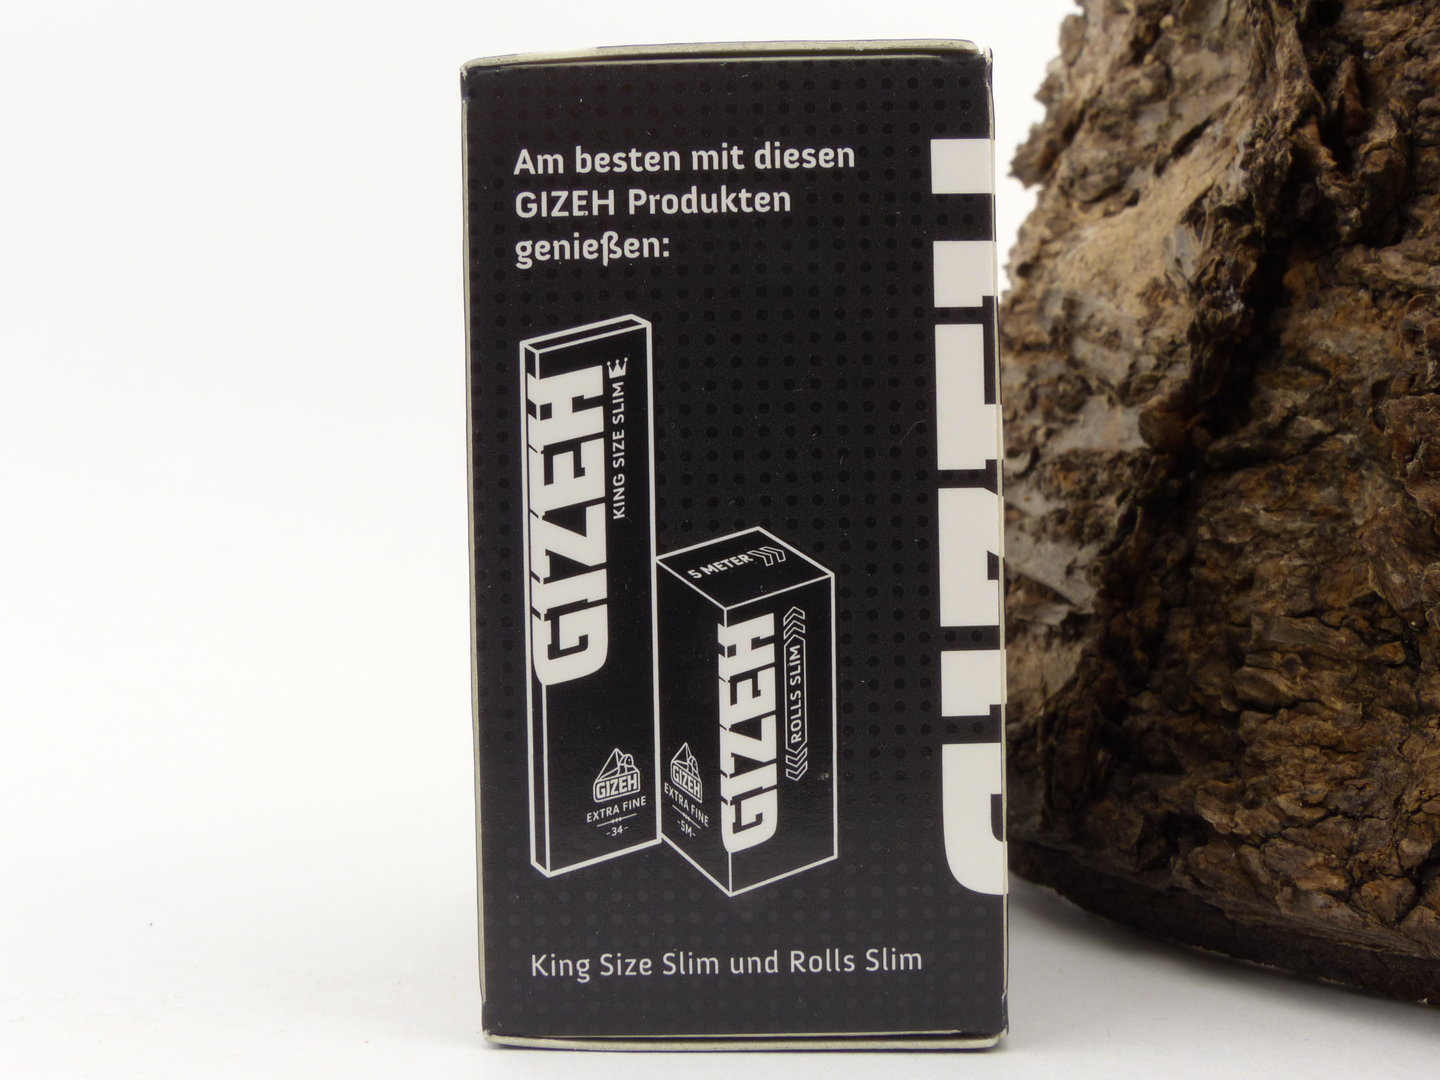 GIZEH Activated Charcoal Filter 6mm 34 pcs - Pfeifen Shop Online